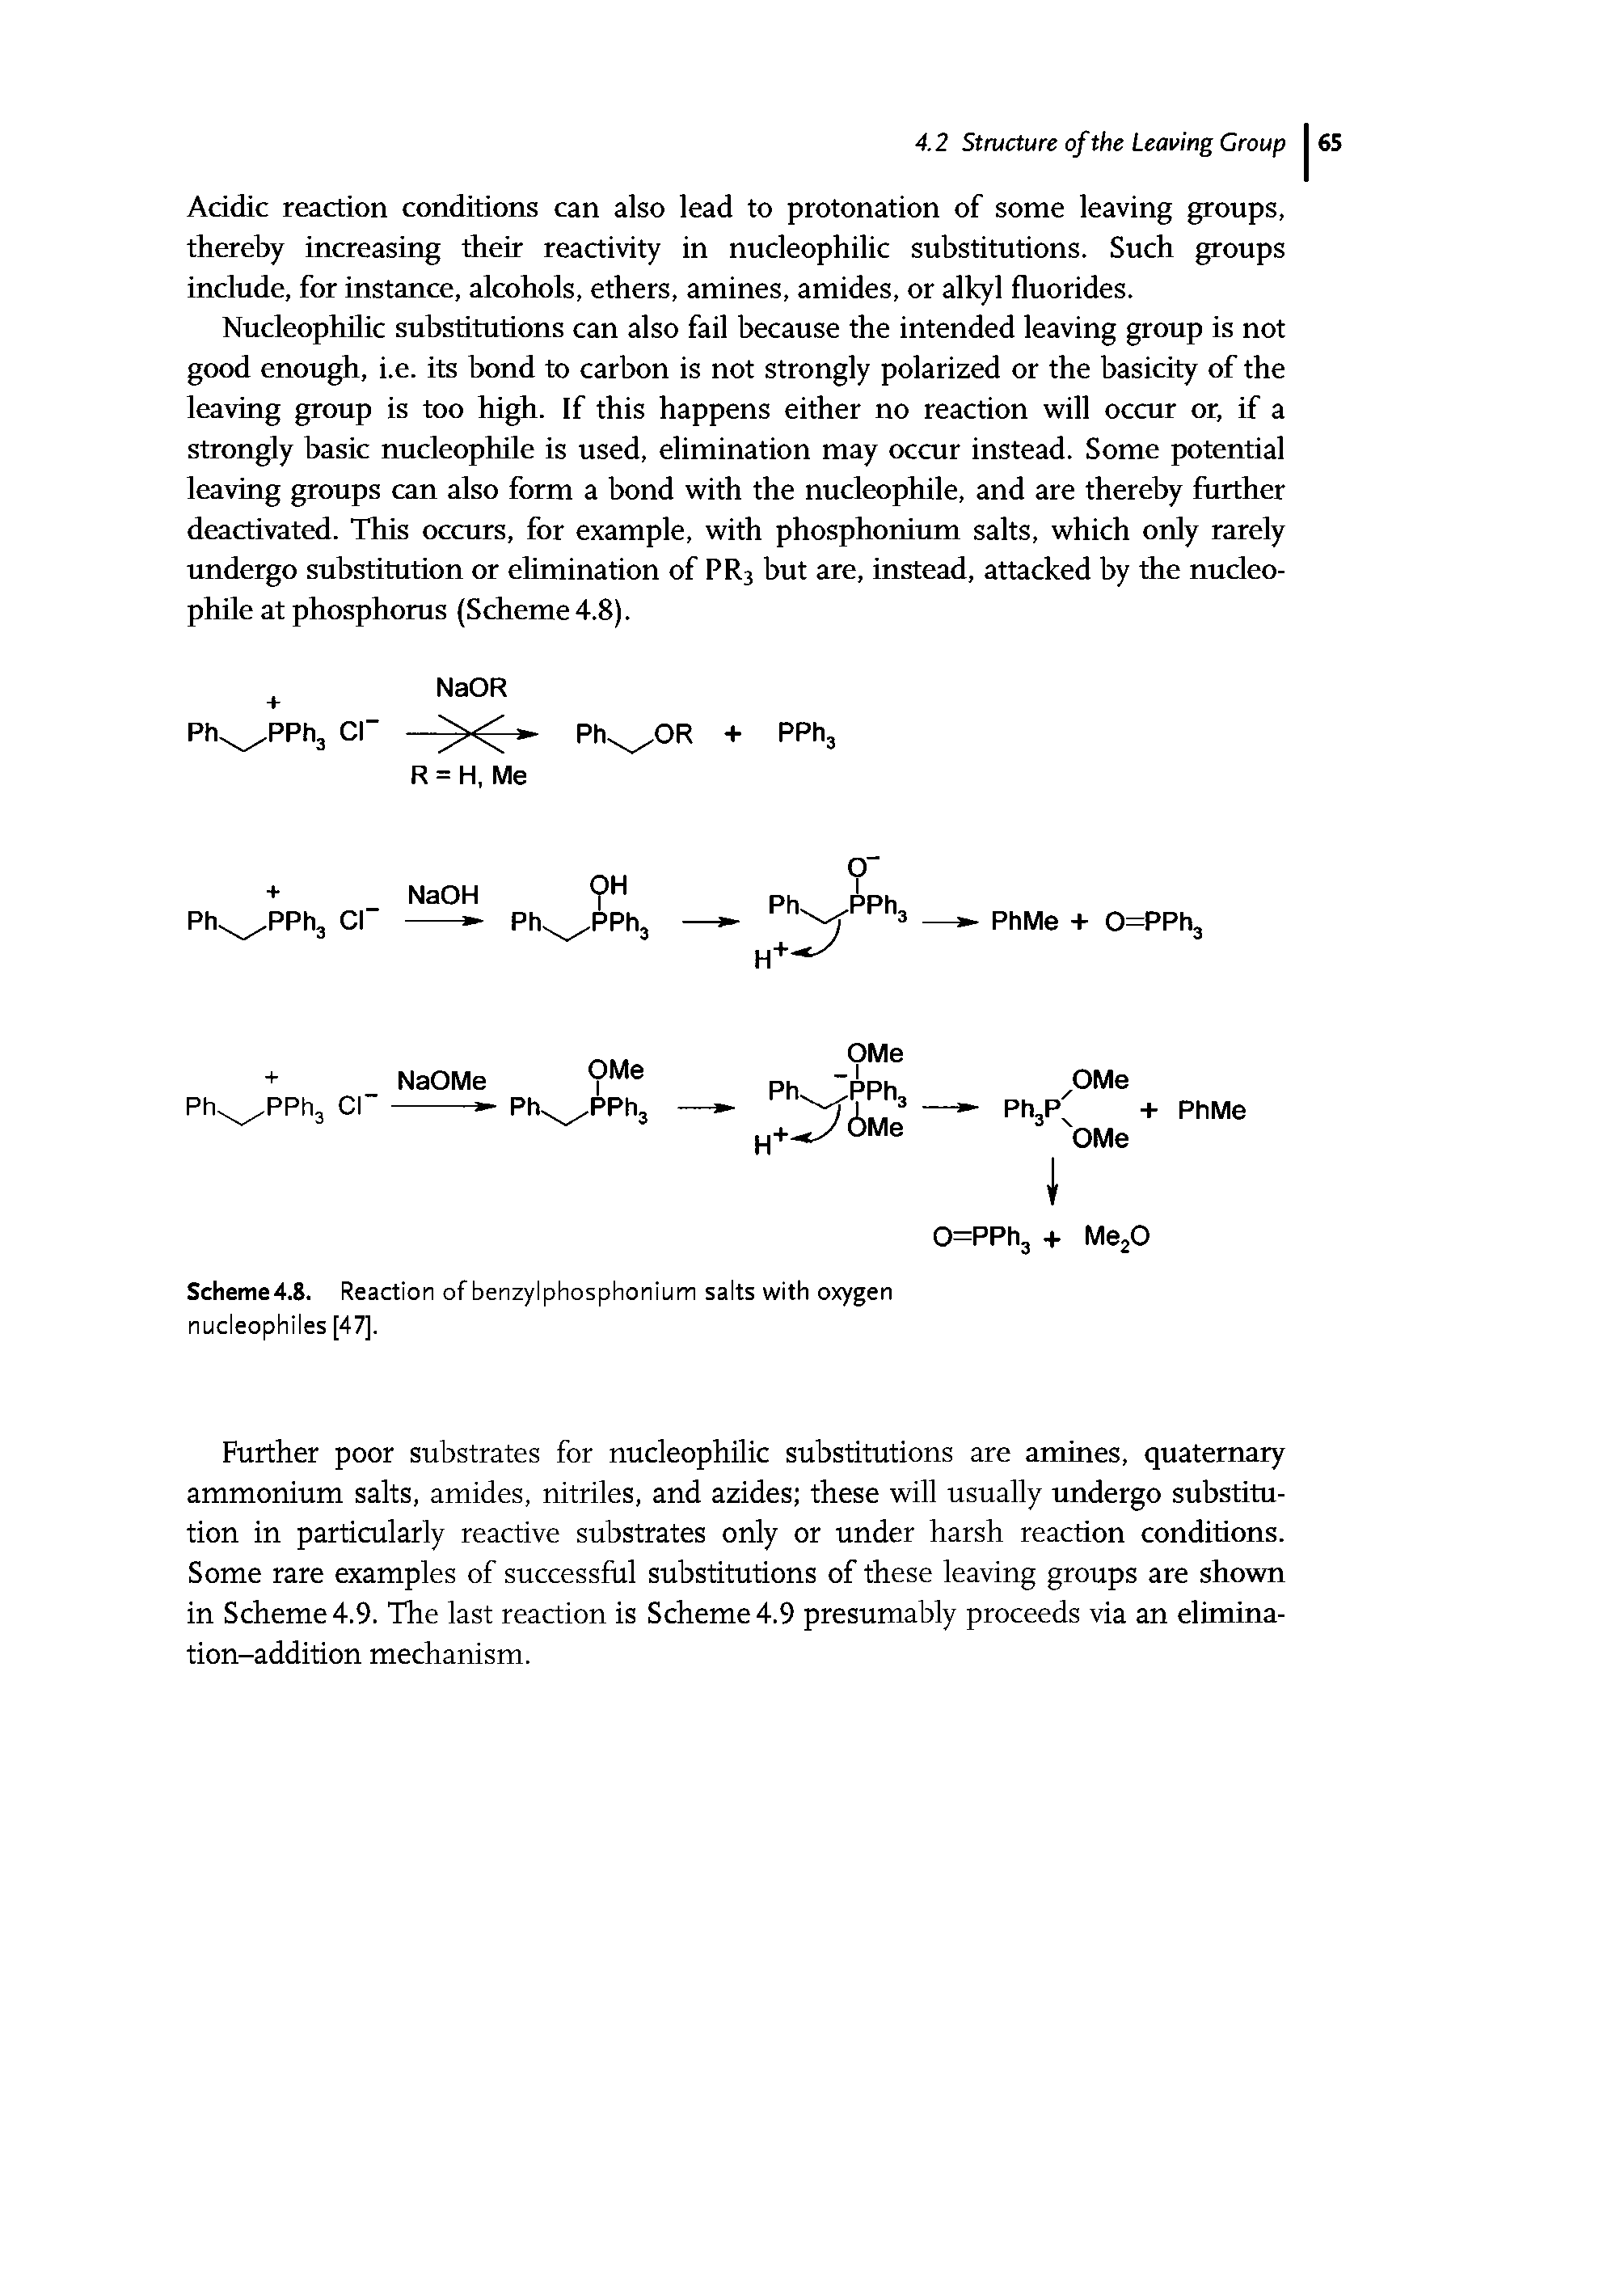 Scheme4.8. Reaction of benzylphosphonium salts with oxygen nucleophiles [47].